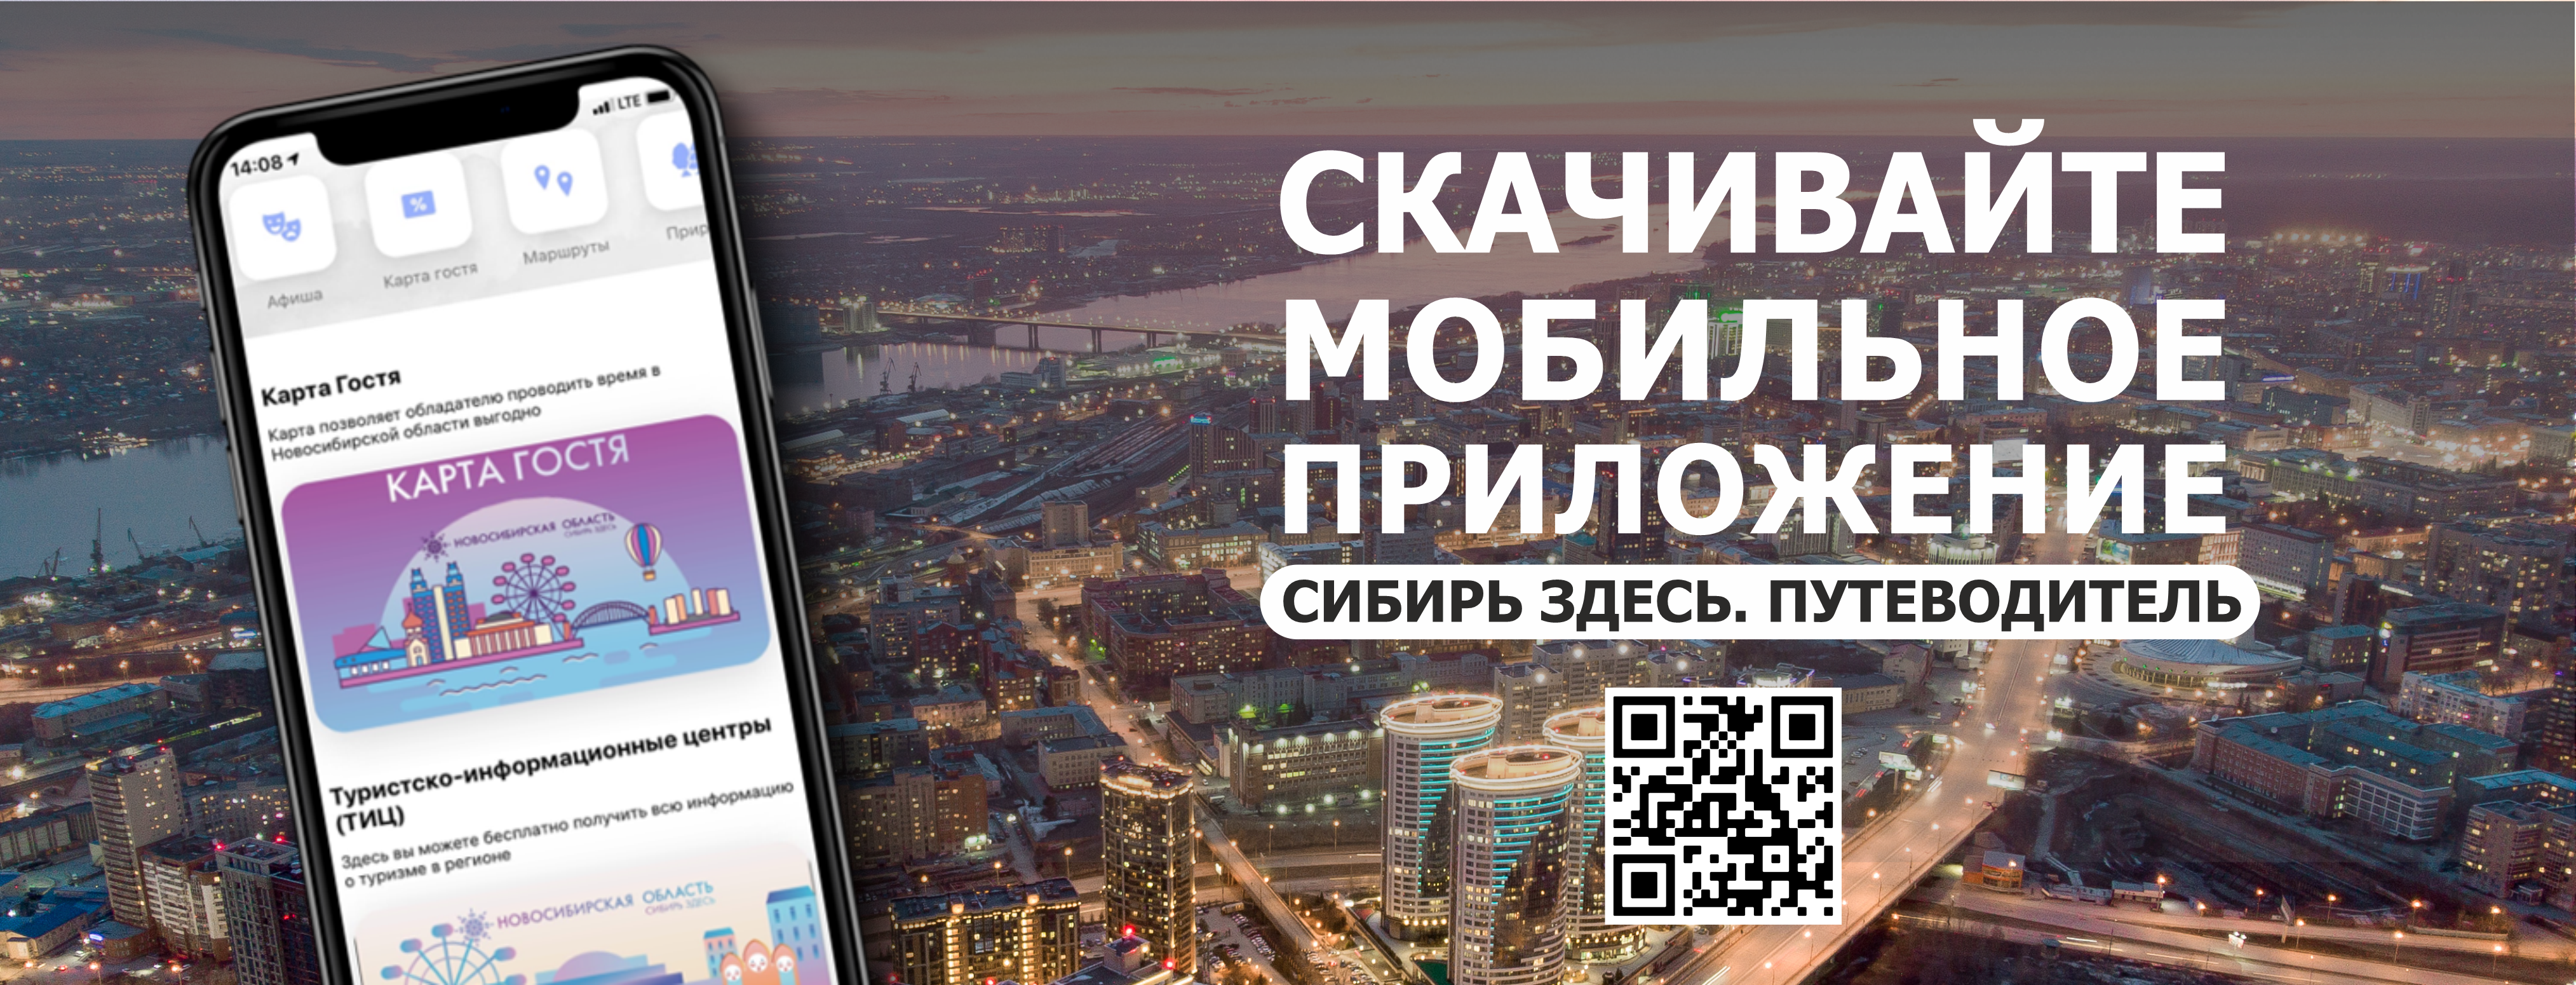 Приложение Сибирь здесь. Мобильное приложение Сибирское. Тур Новосибирск. Интересные места Новосибирска для туристов. Гид сибири сайт